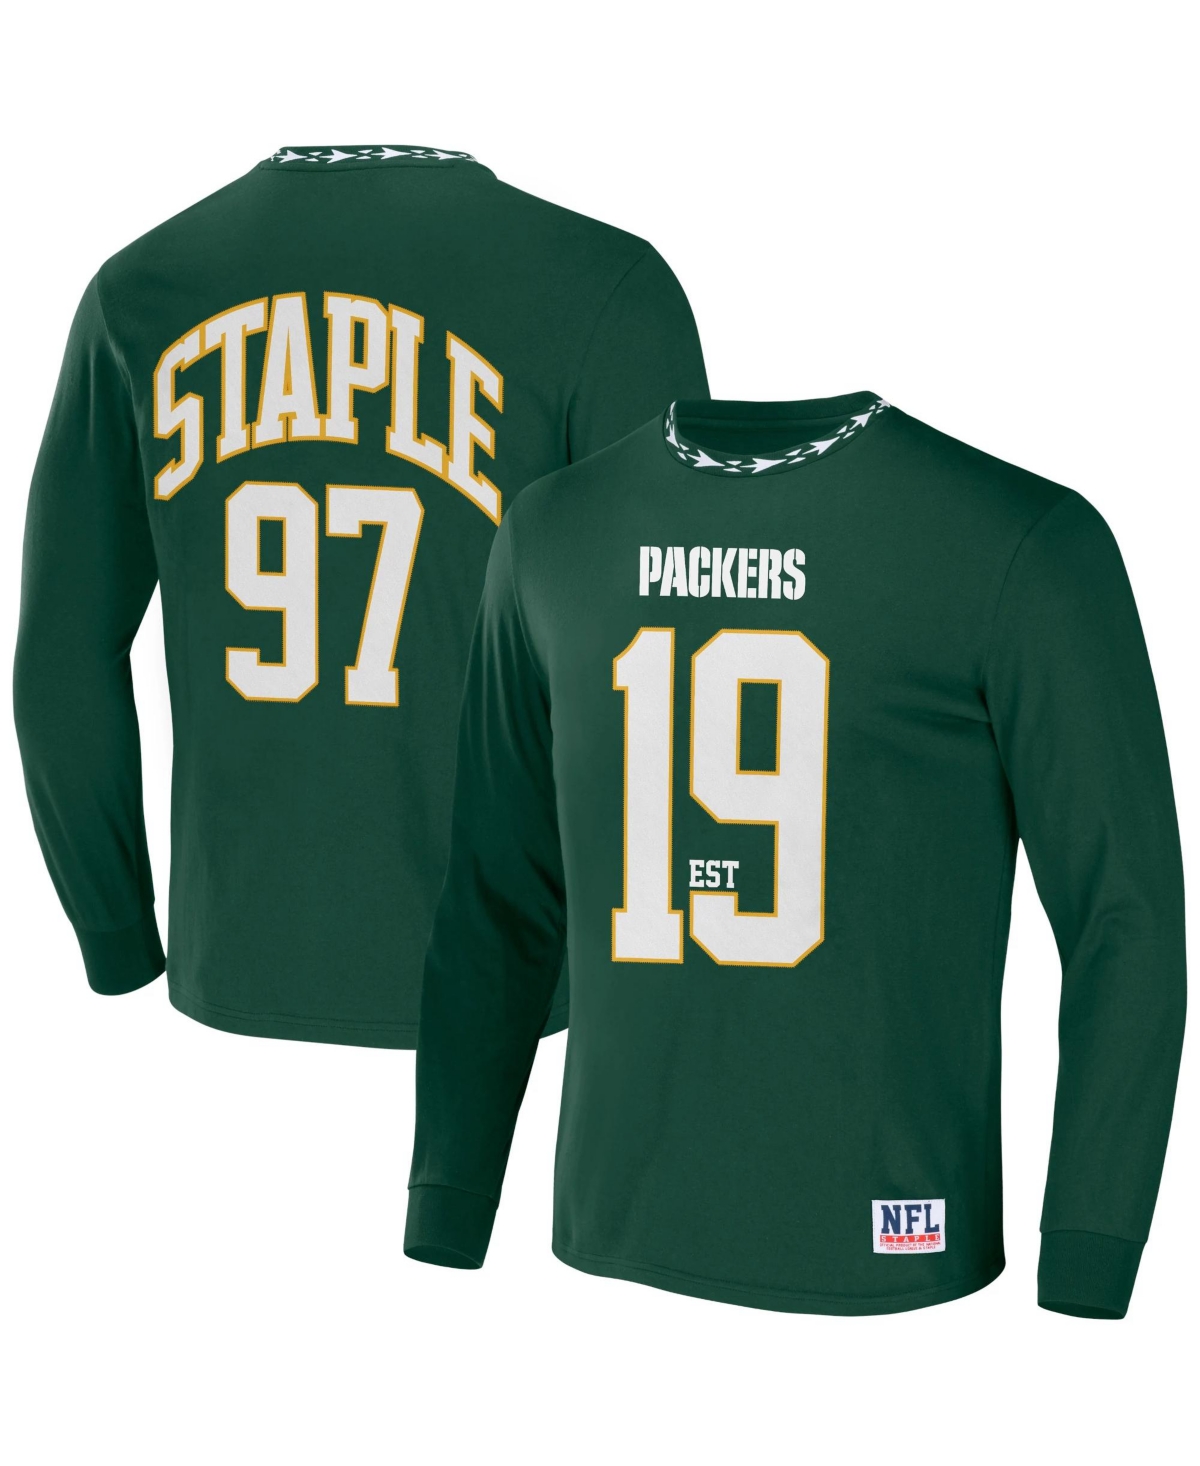 Shop Nfl Properties Men's Nfl X Staple Hunter Green Green Bay Packers Core Long Sleeve Jersey Style T-shirt